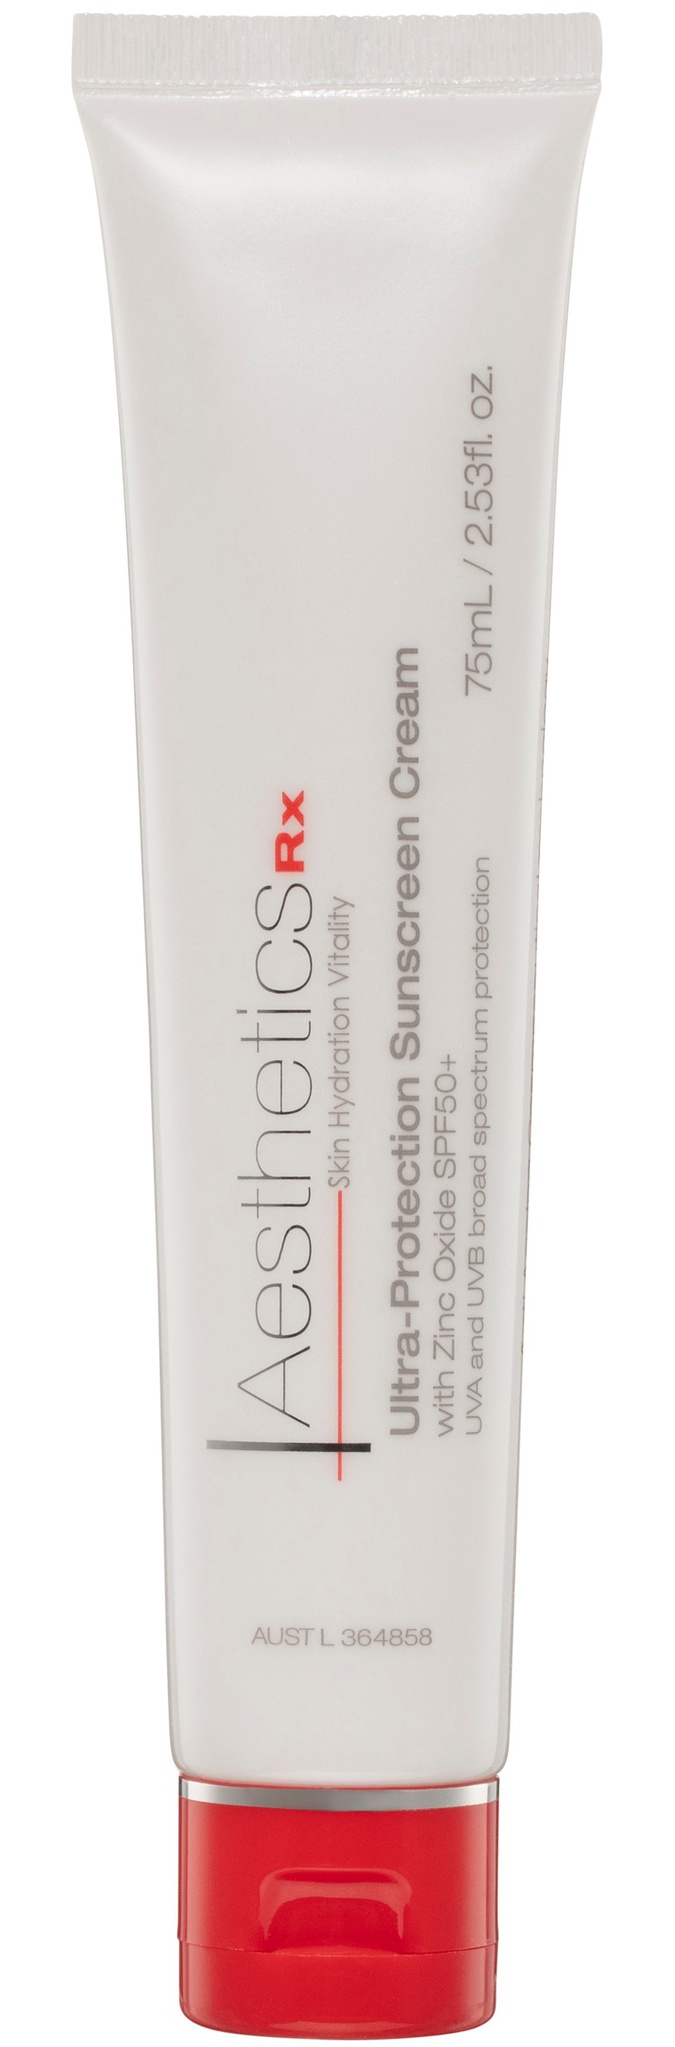 AestheticsRX Ultra Protection Sunscreen Cream SPF50 With Zinc Oxide